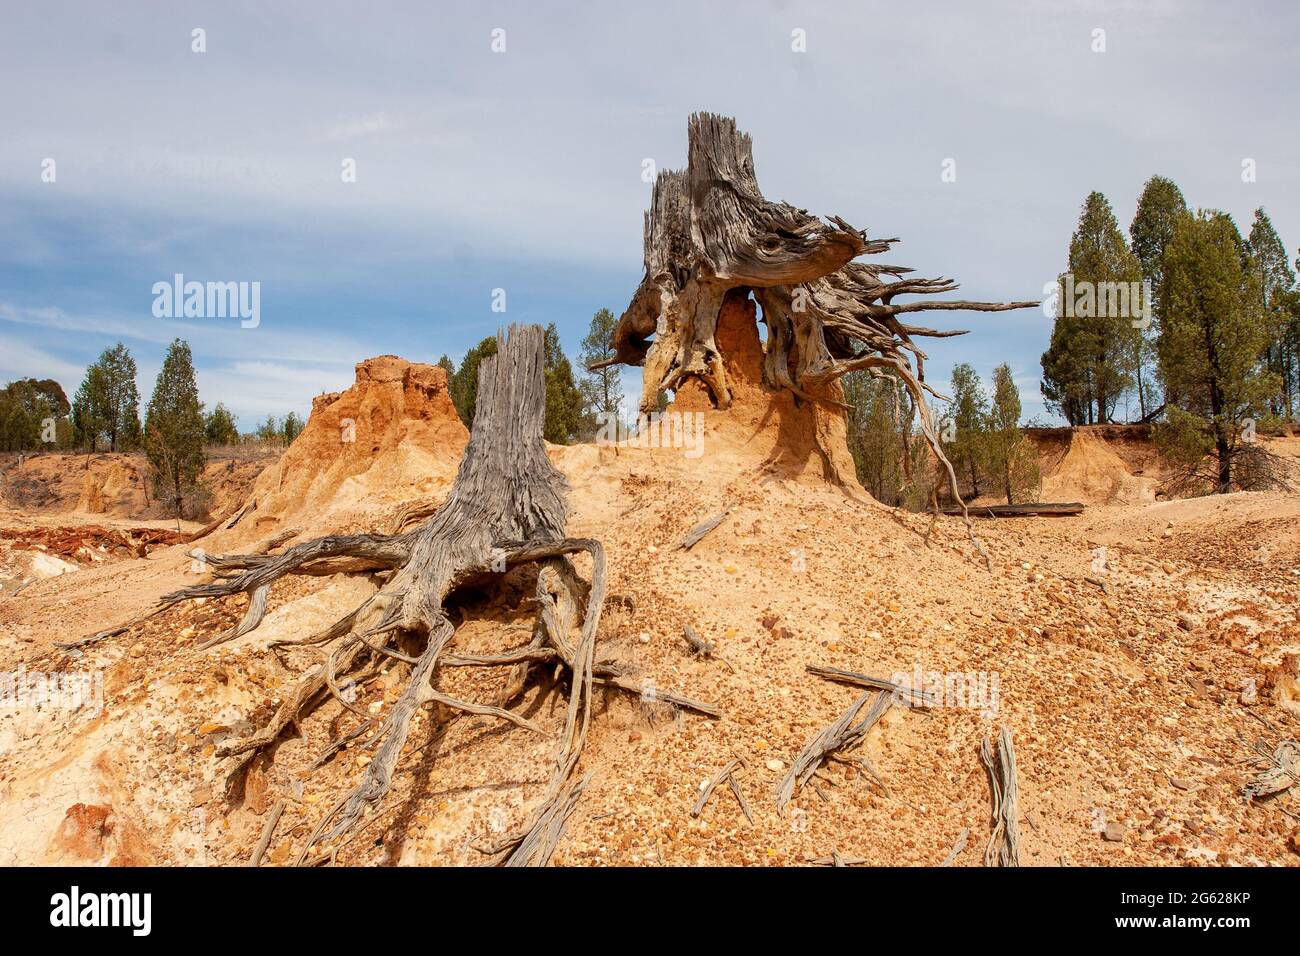 Cypress Pine Tree Stumps on eroded ground Stock Photo